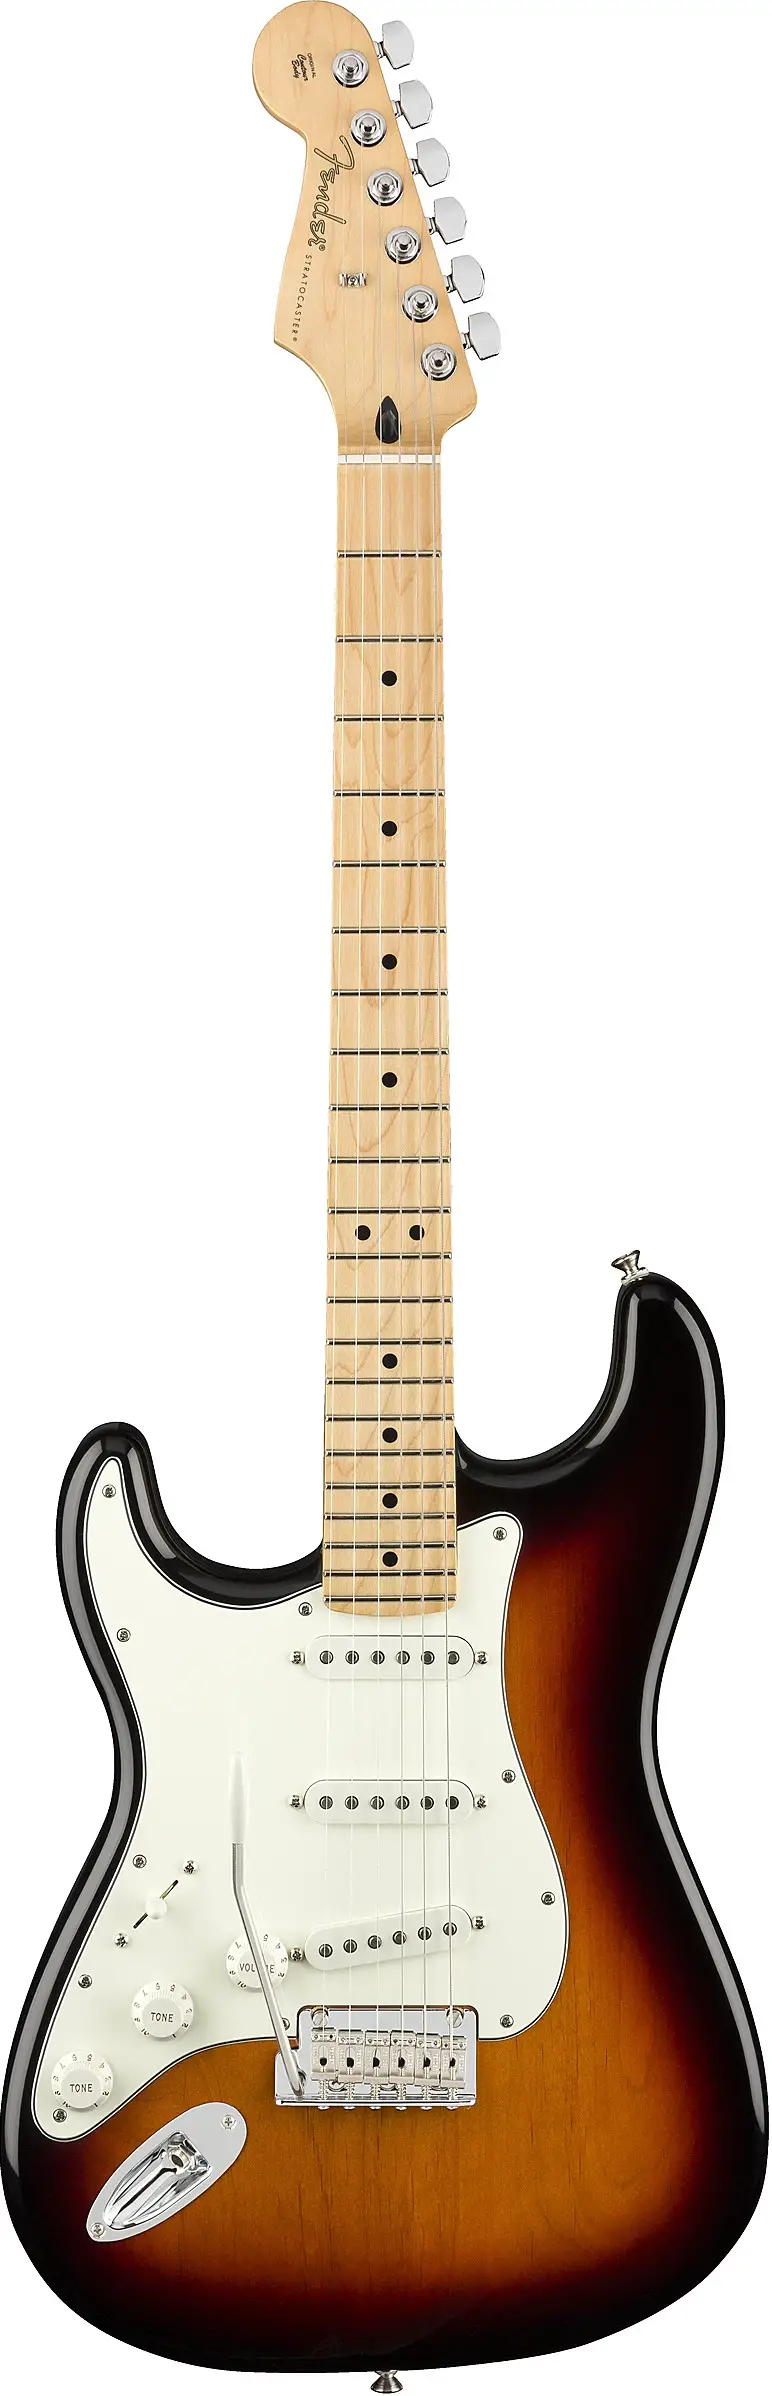 Player Stratocaster Left-Handed by Fender